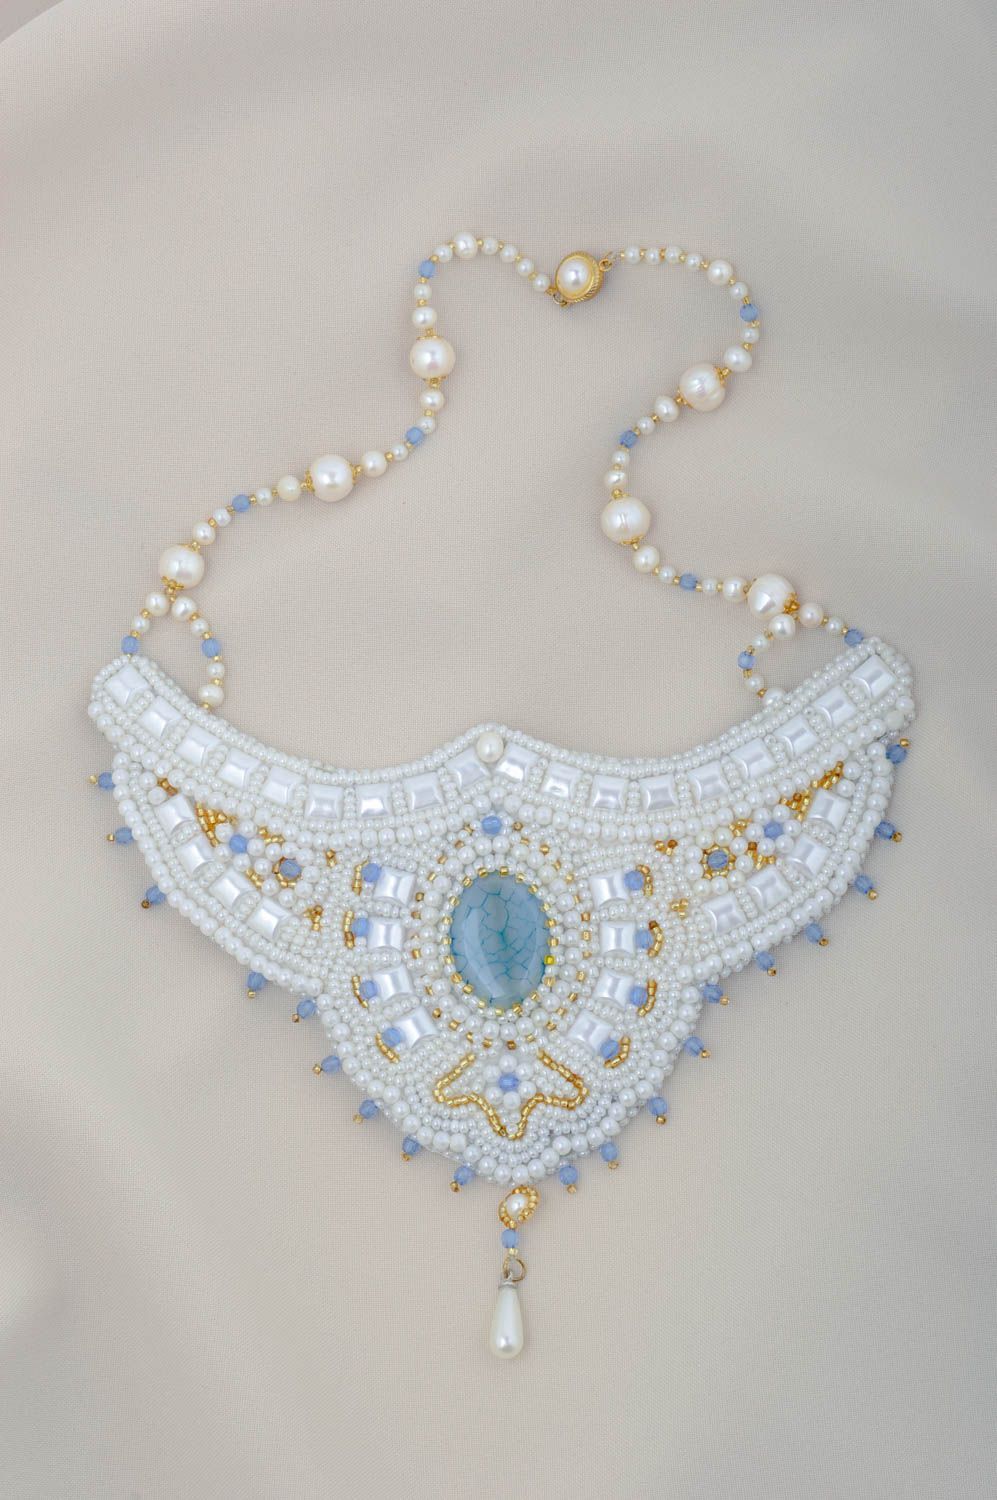 Handmade unusual beaded necklace festive massive necklace designer accessory photo 1